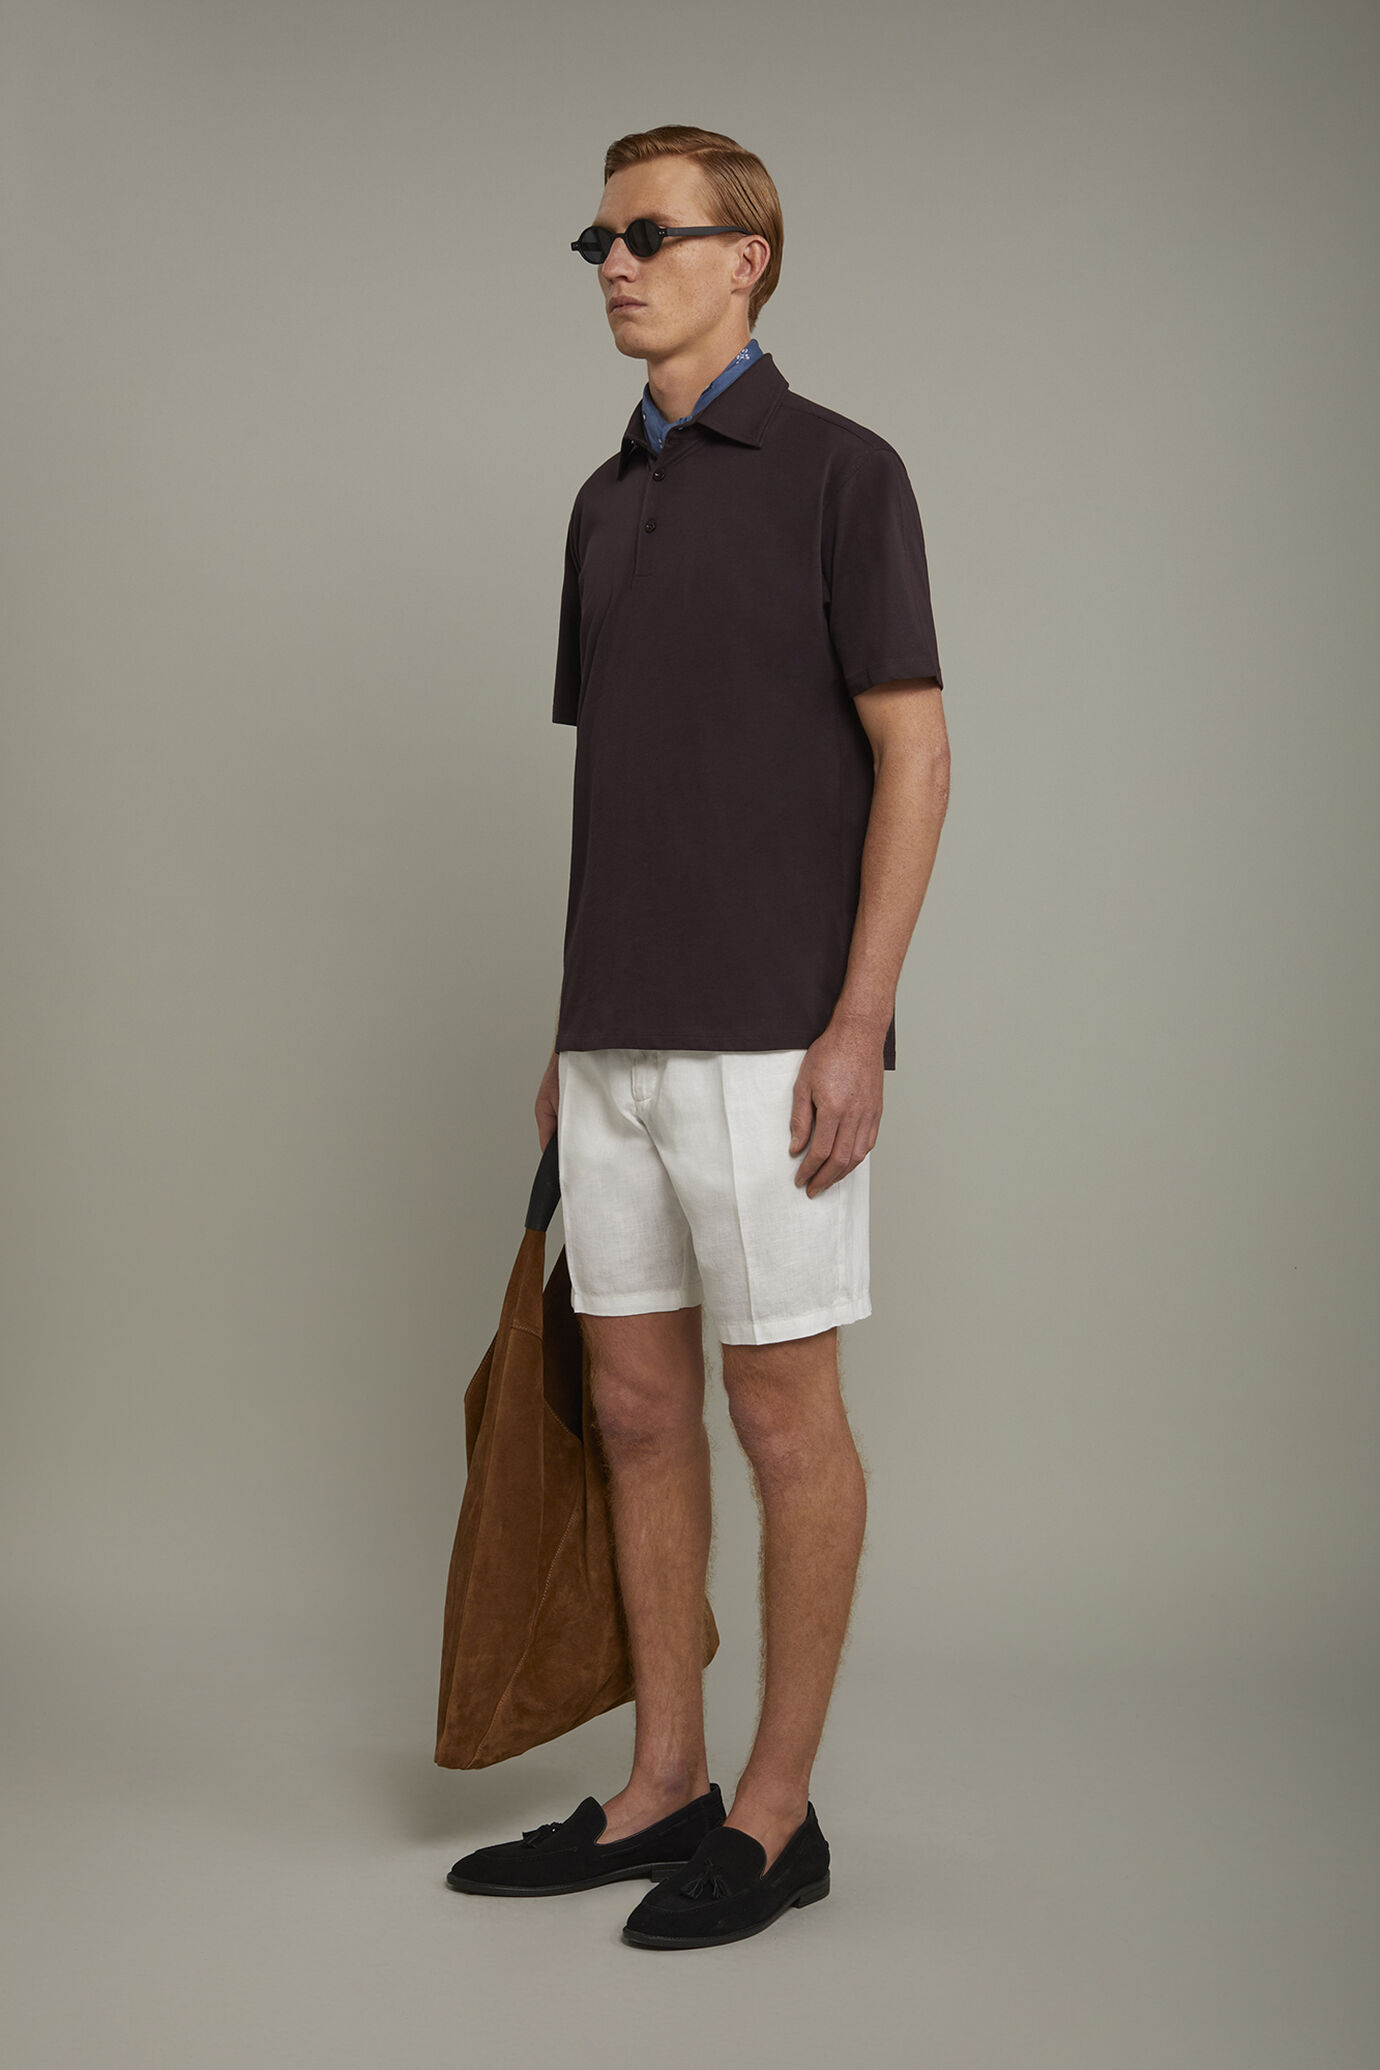 Men’s polo shirt short sleeves 100% supima cotton regular fit image number 1